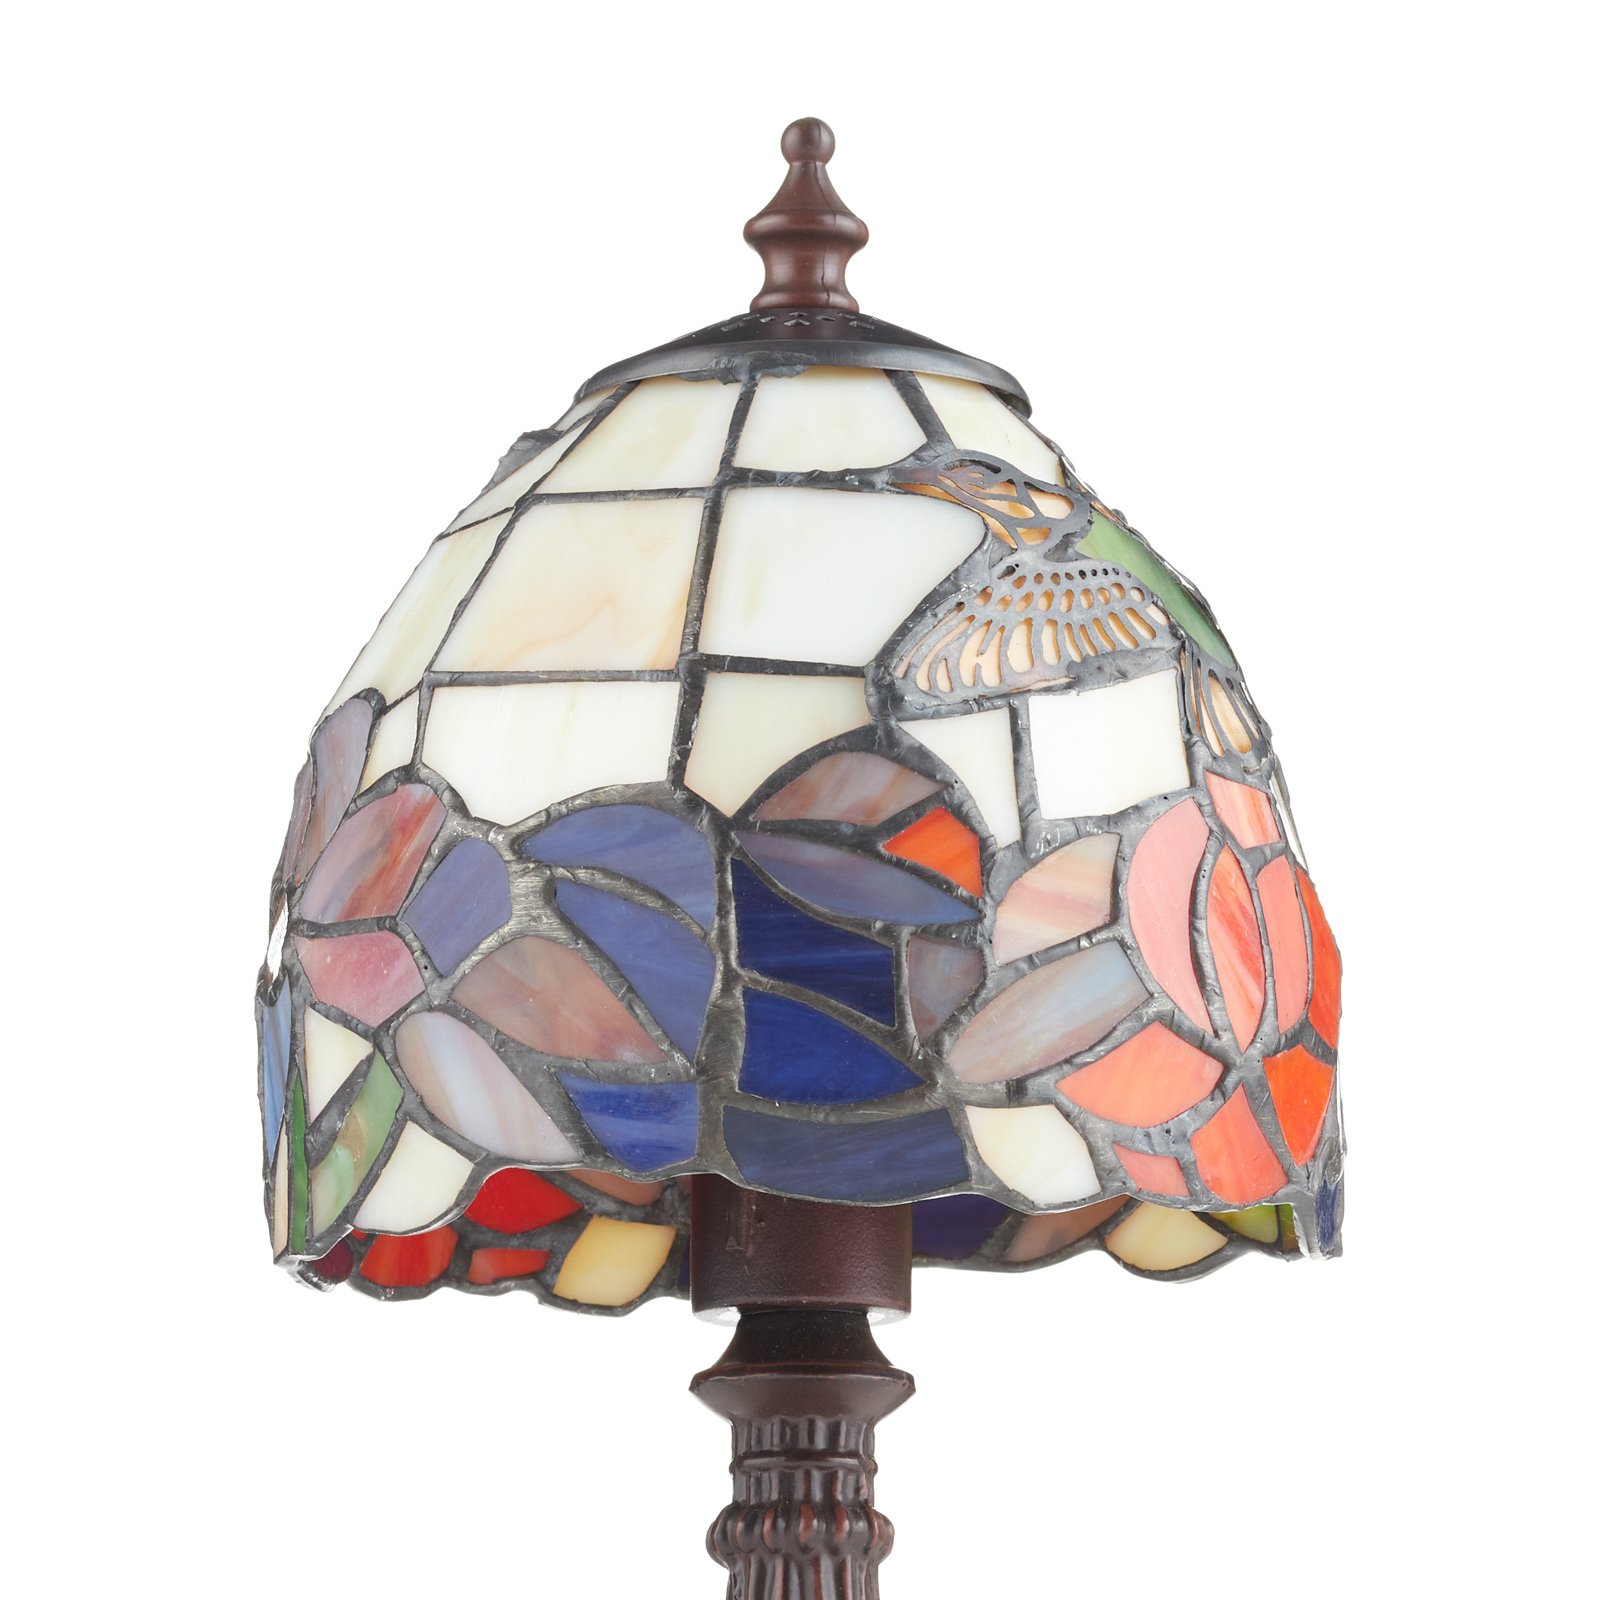 IRENA - leuke tafellamp in Tiffany-stijl